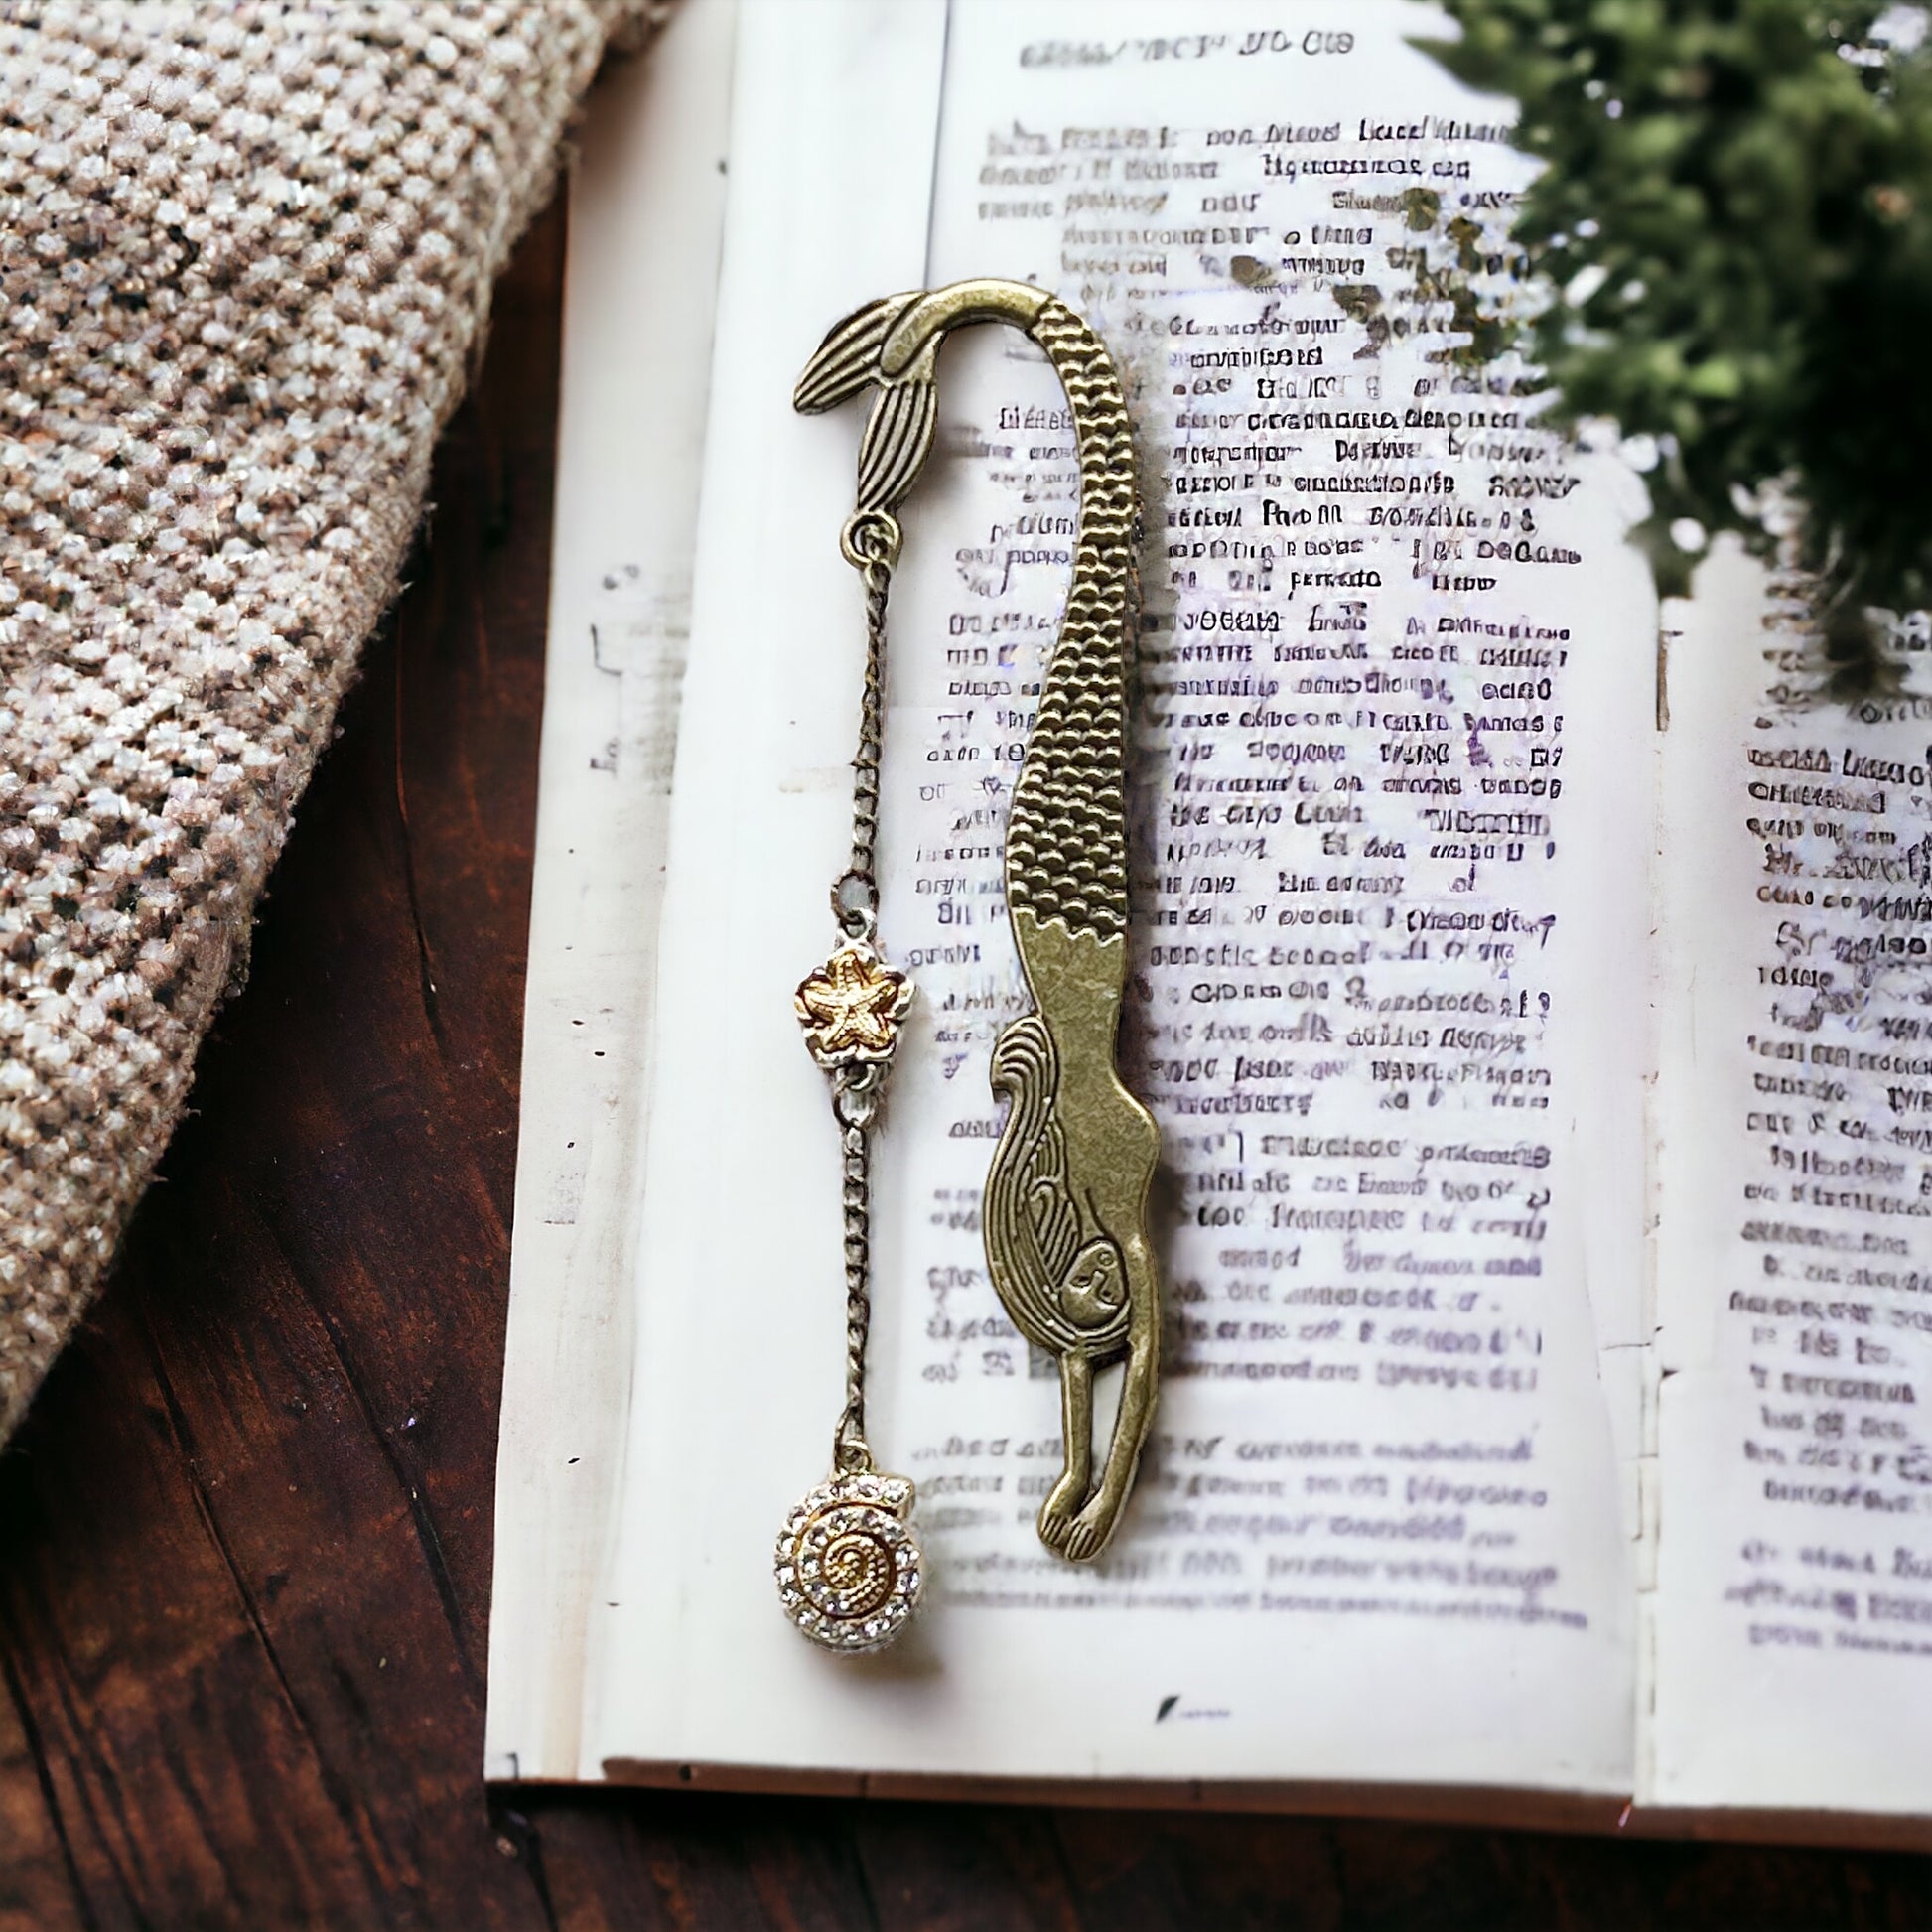 Metal Mermaid Bookmark with Seashell Dangle Chain Charm - Stylish & Unique Reading Accessory